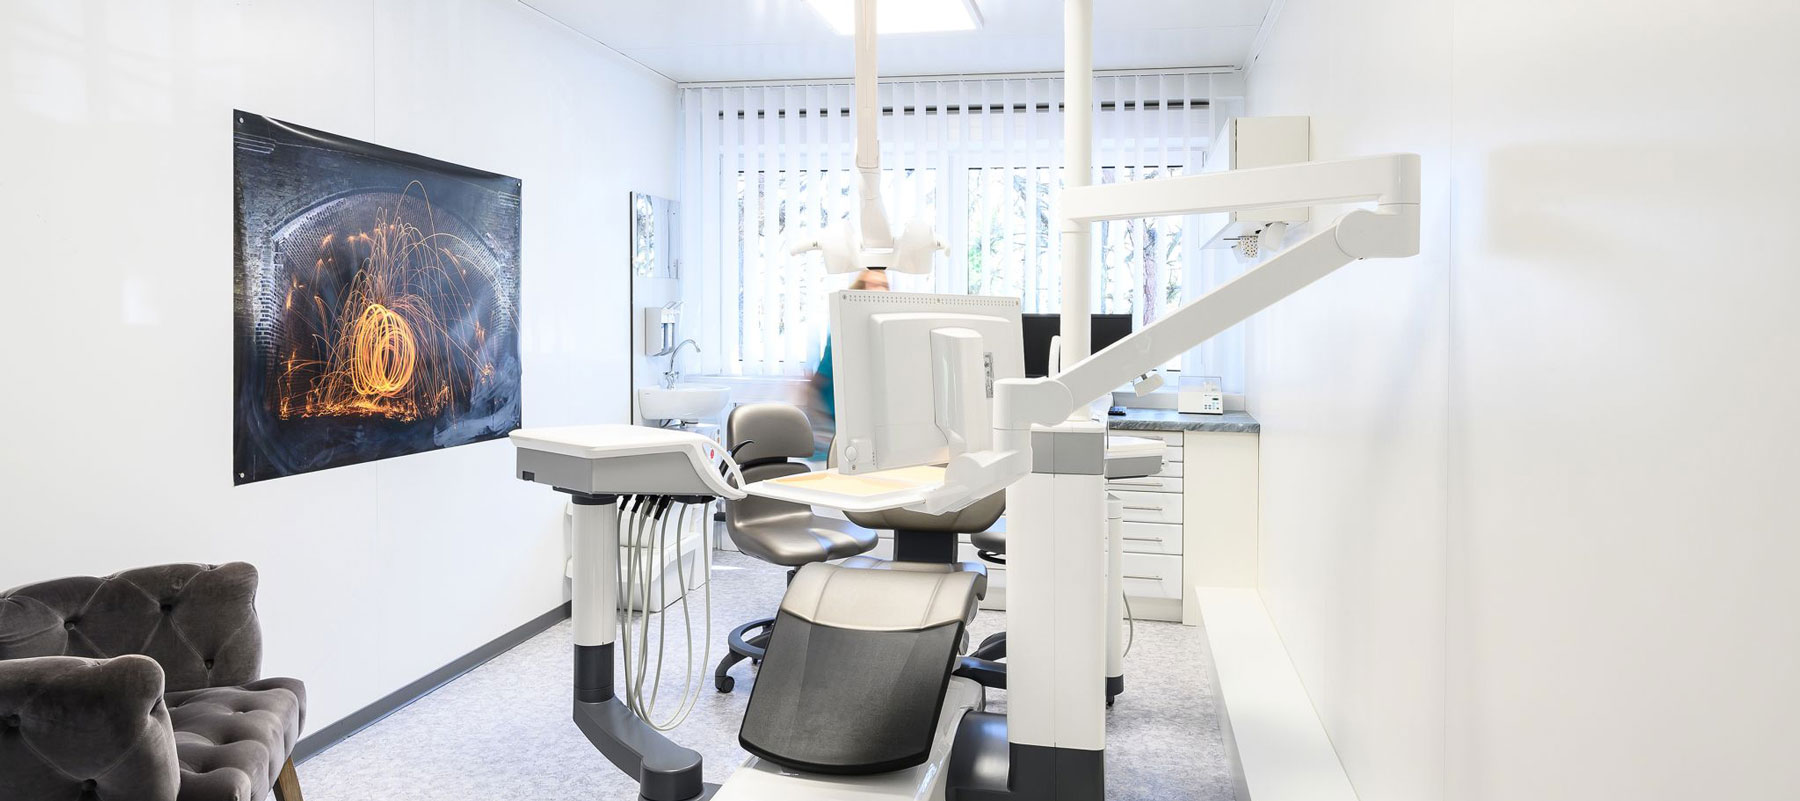 dentist space modular healthcare